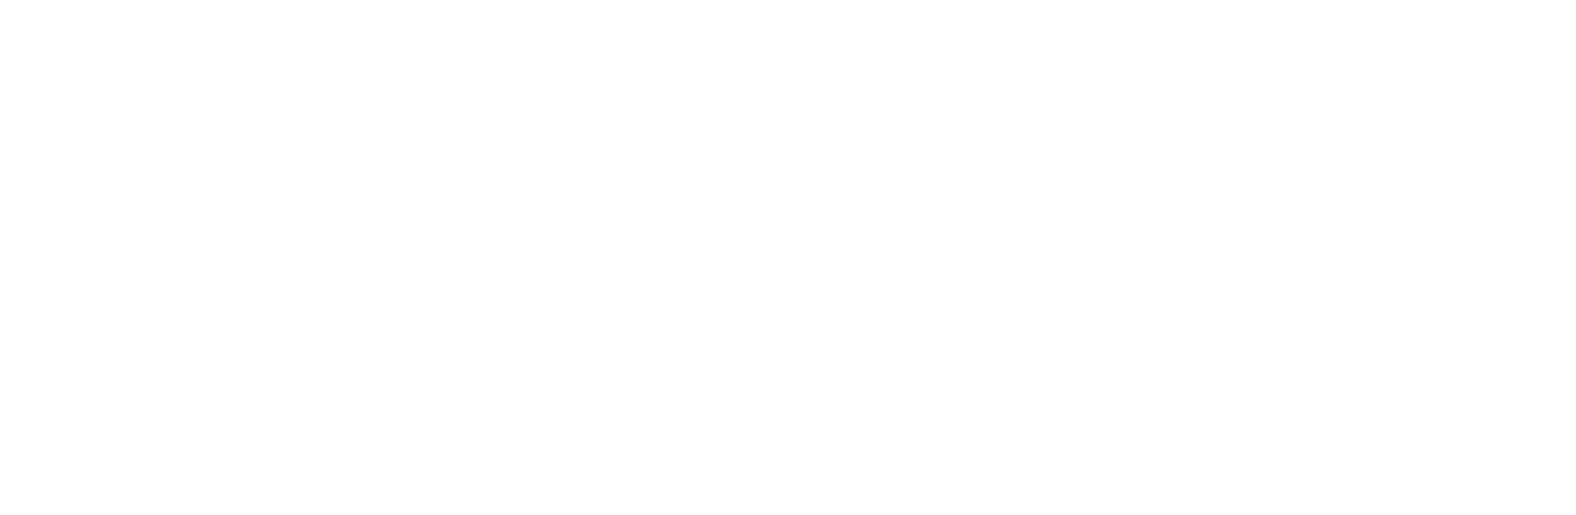 Svenska Cellulosa Aktiebolaget (SCA) logo grand pour les fonds sombres (PNG transparent)